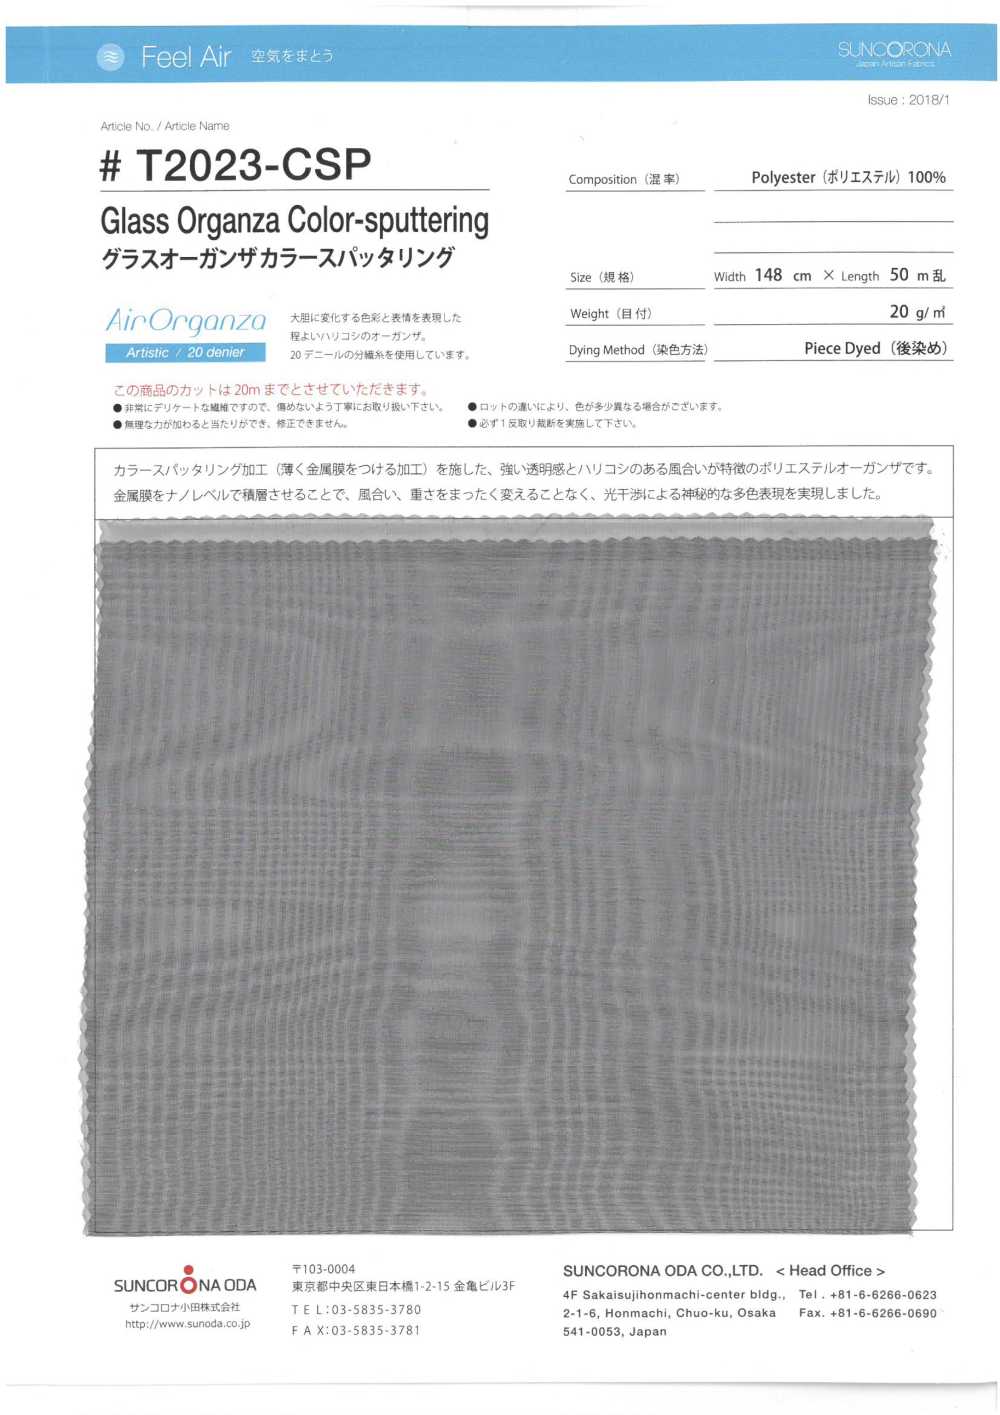 T2023-CSP Organza De Vidro Colorida Salpicada[Têxtil / Tecido] Suncorona Oda